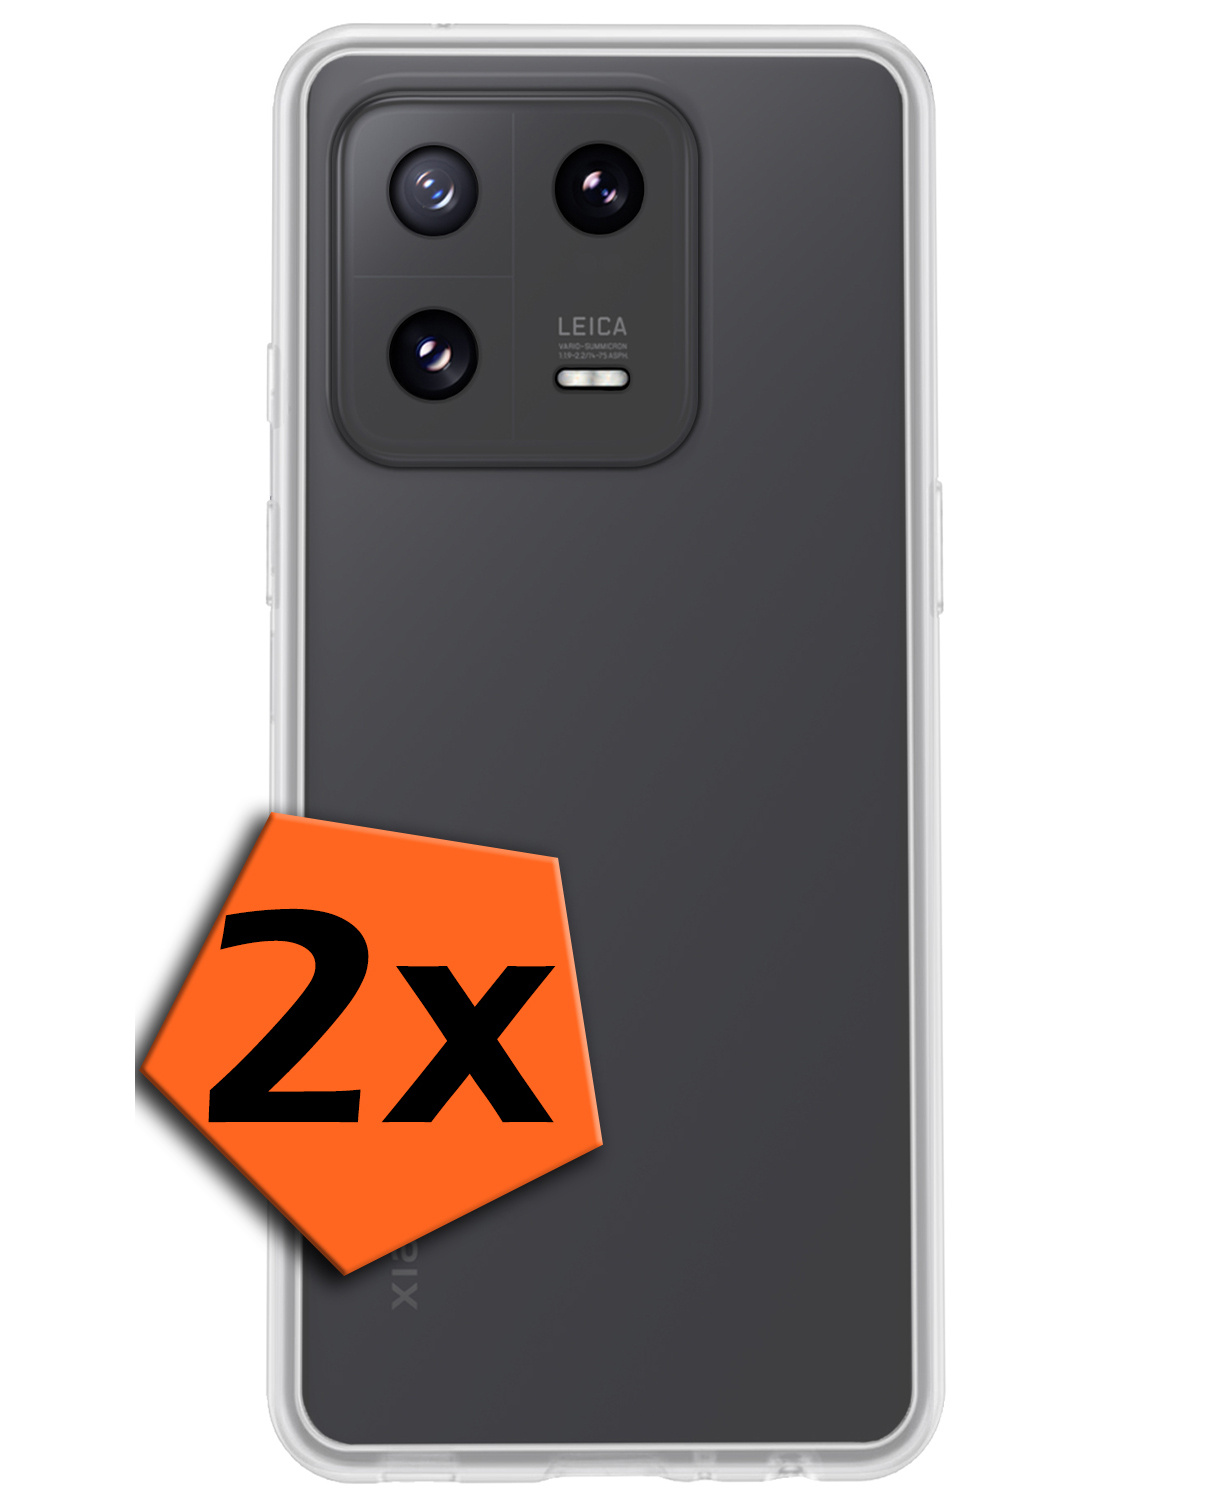 Nomfy Xiaomi 13 Pro Hoesje Siliconen Case Back Cover - Xiaomi 13 Pro Hoes Cover Silicone - Transparant - 2X